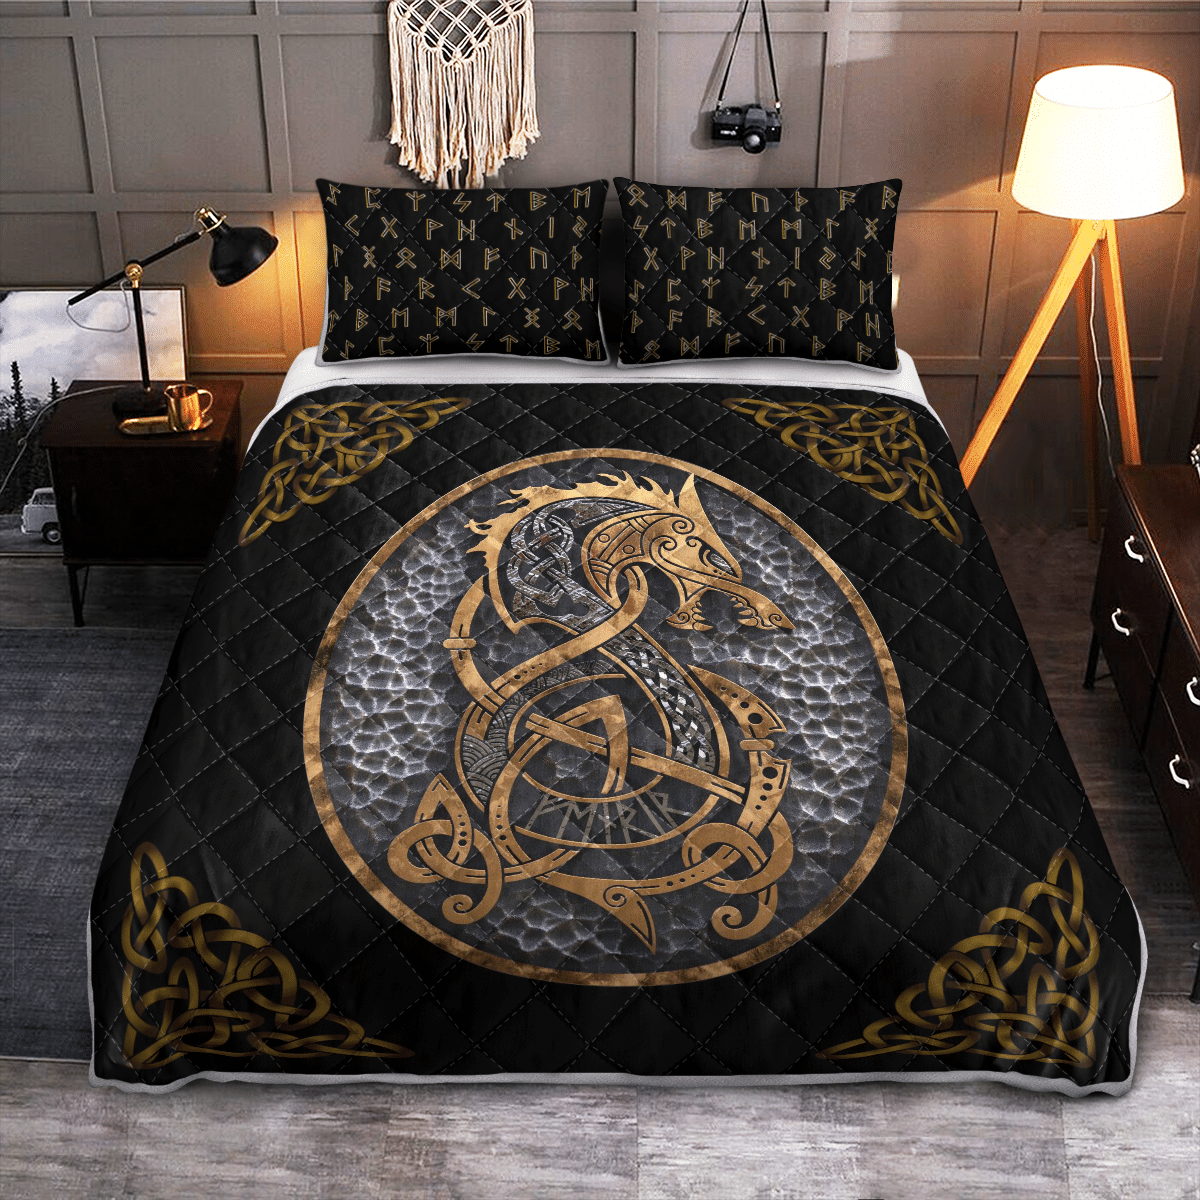 Fenrir Dragon Viking quilt bedding set 1